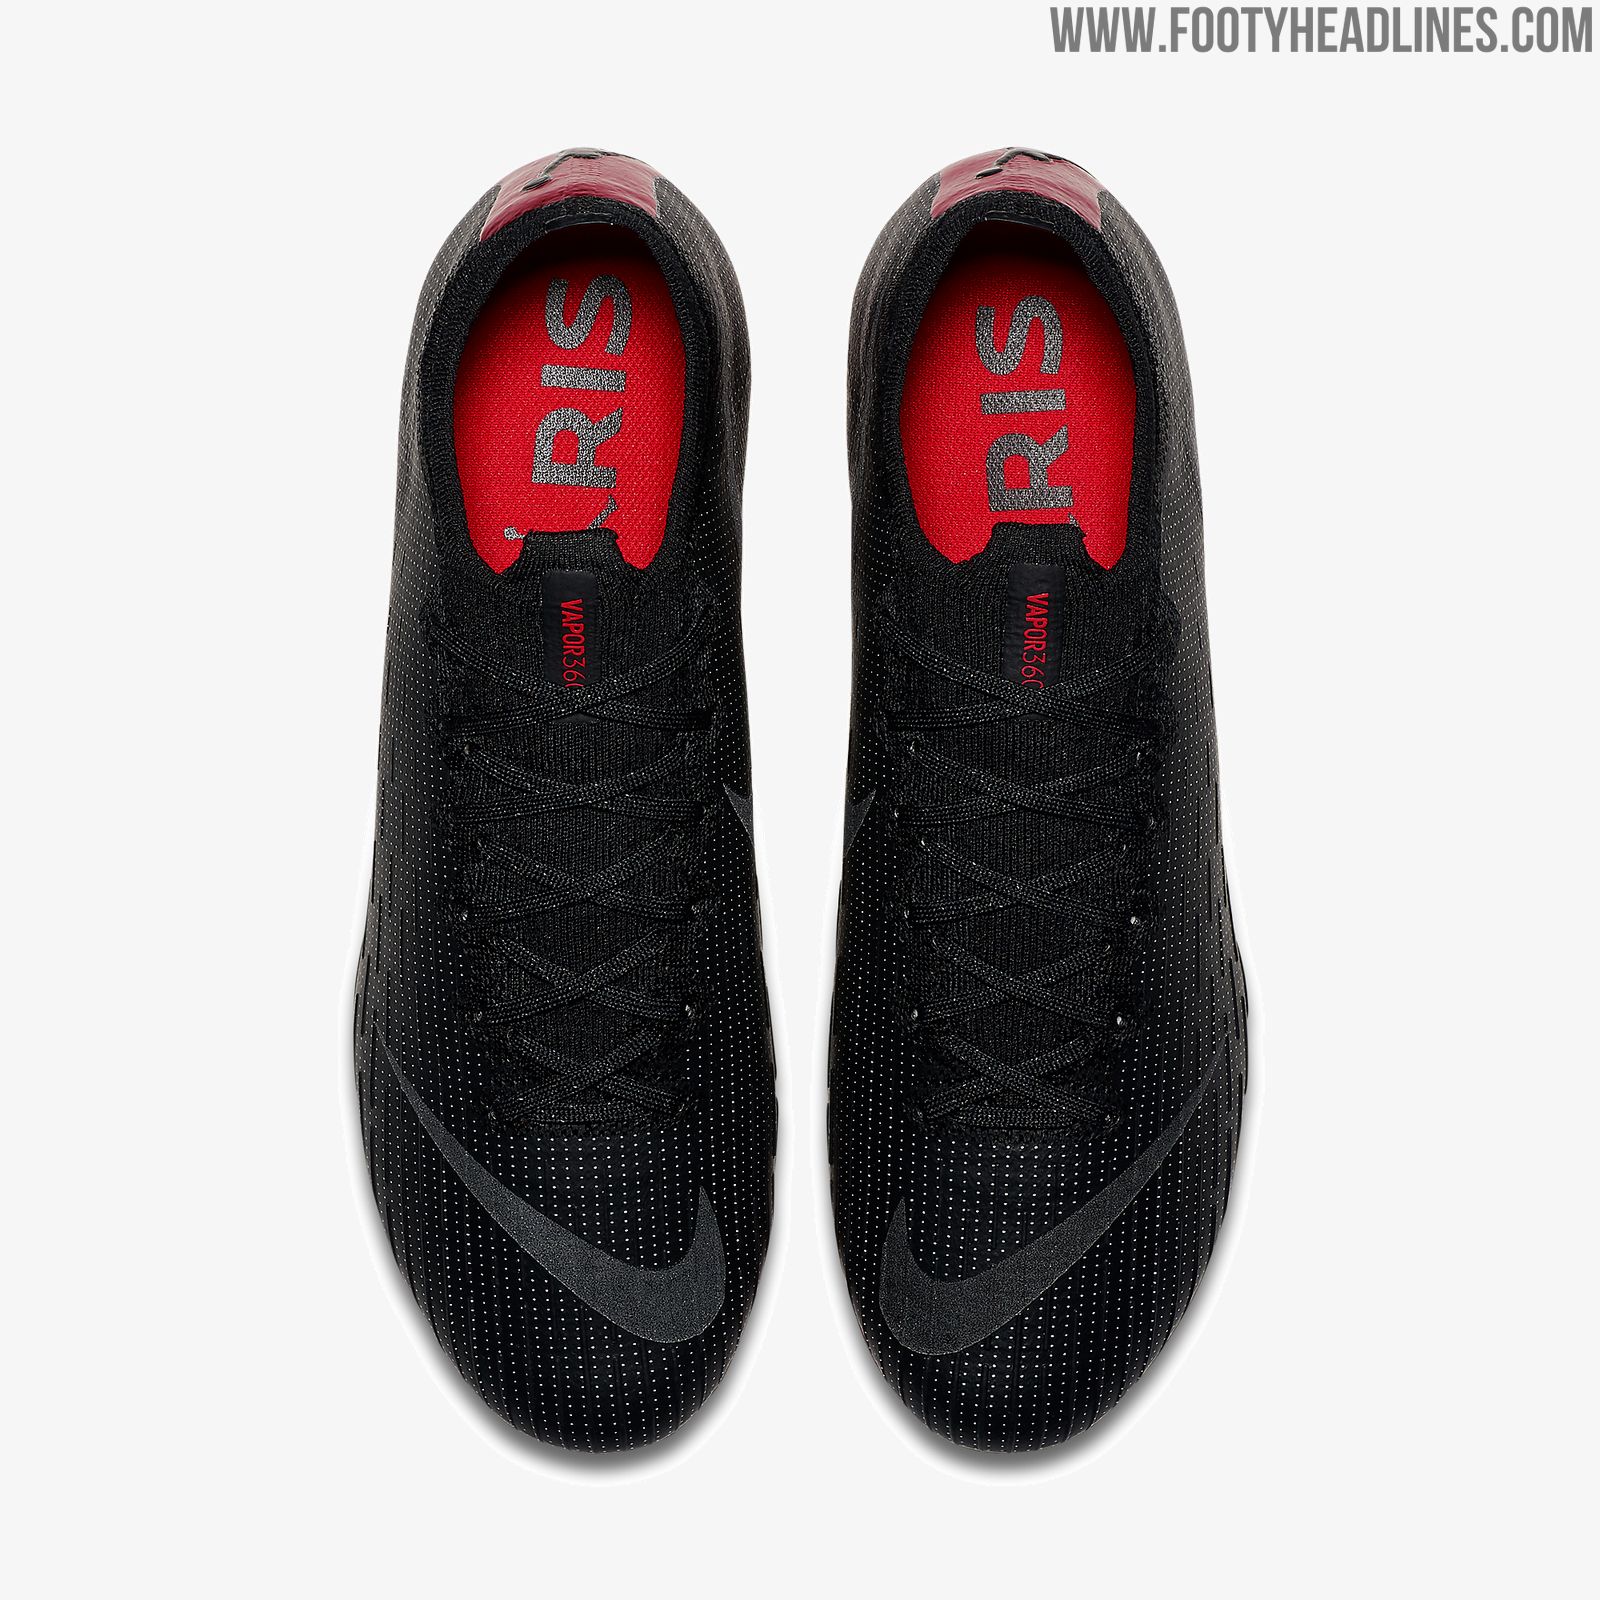 Nike x Jordan x PSG Mercurial Vapor Boots Revealed - Footy Headlines